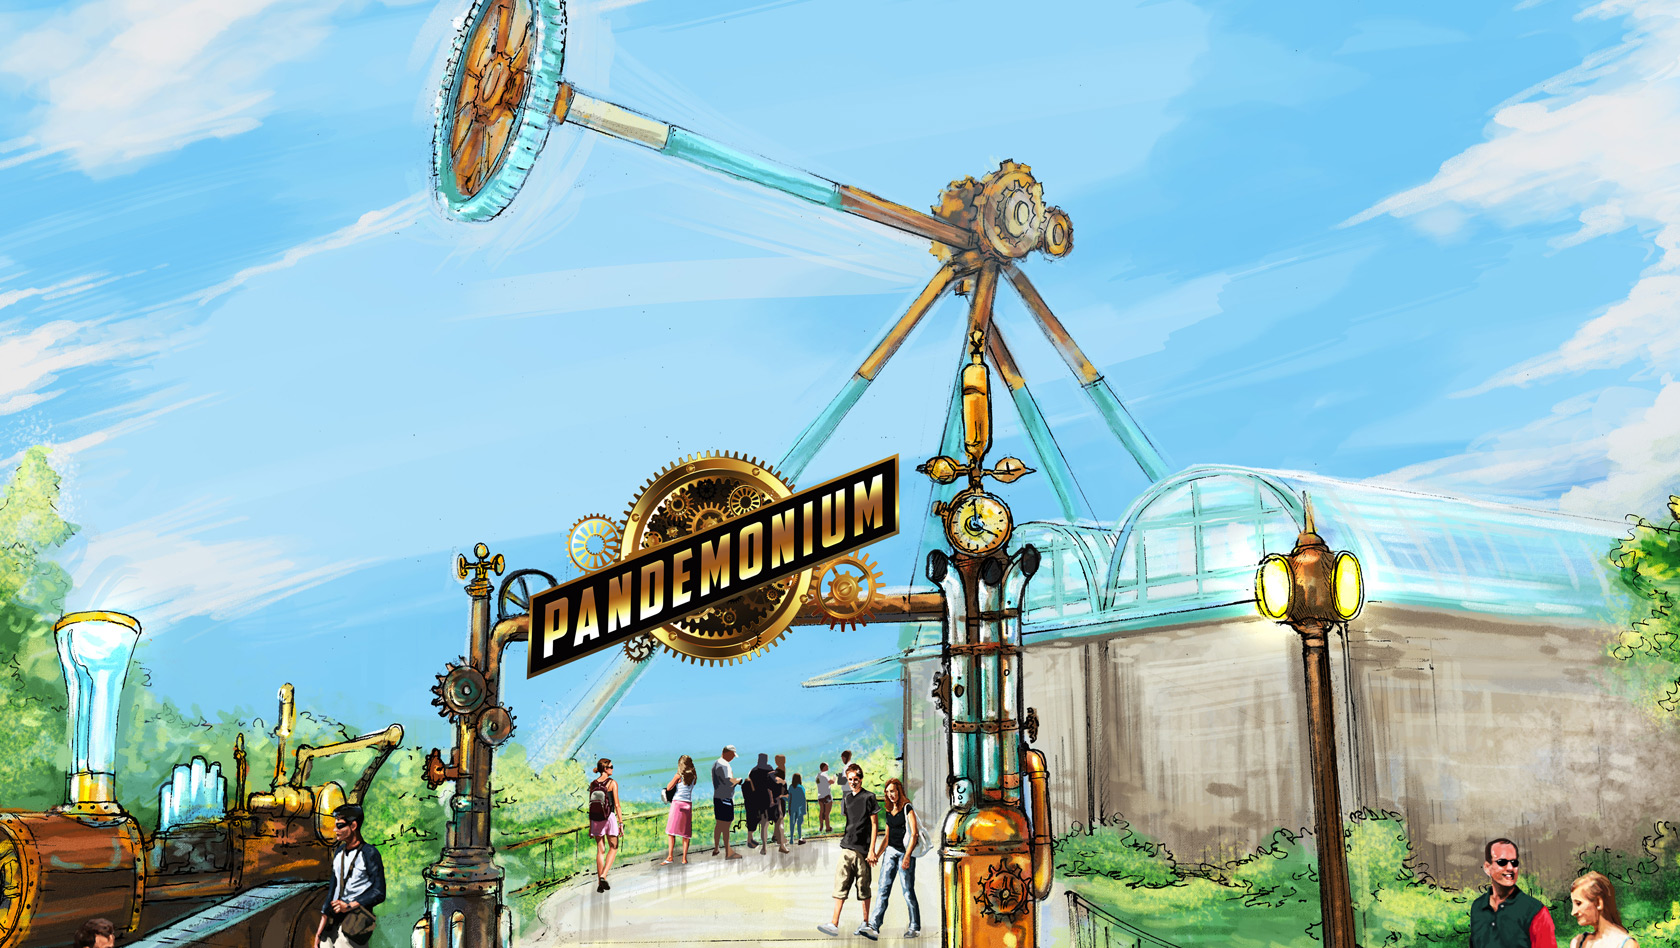 Six Flags Over Georgia 2019 Pandemonium Screampunk Artwork